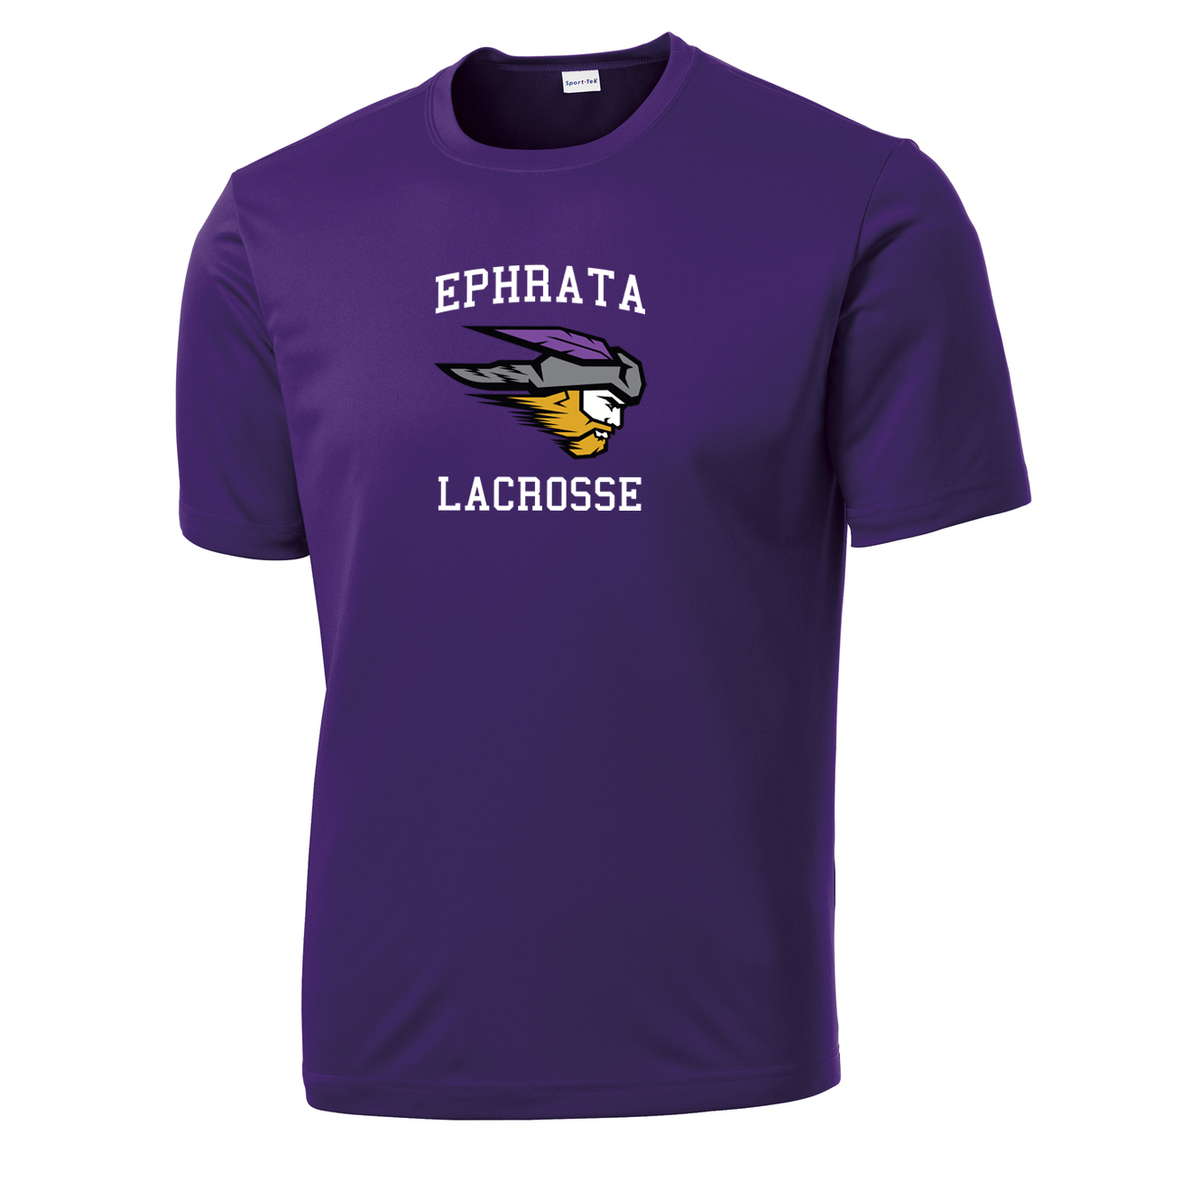 Ephrata Lacrosse Performance T-Shirt